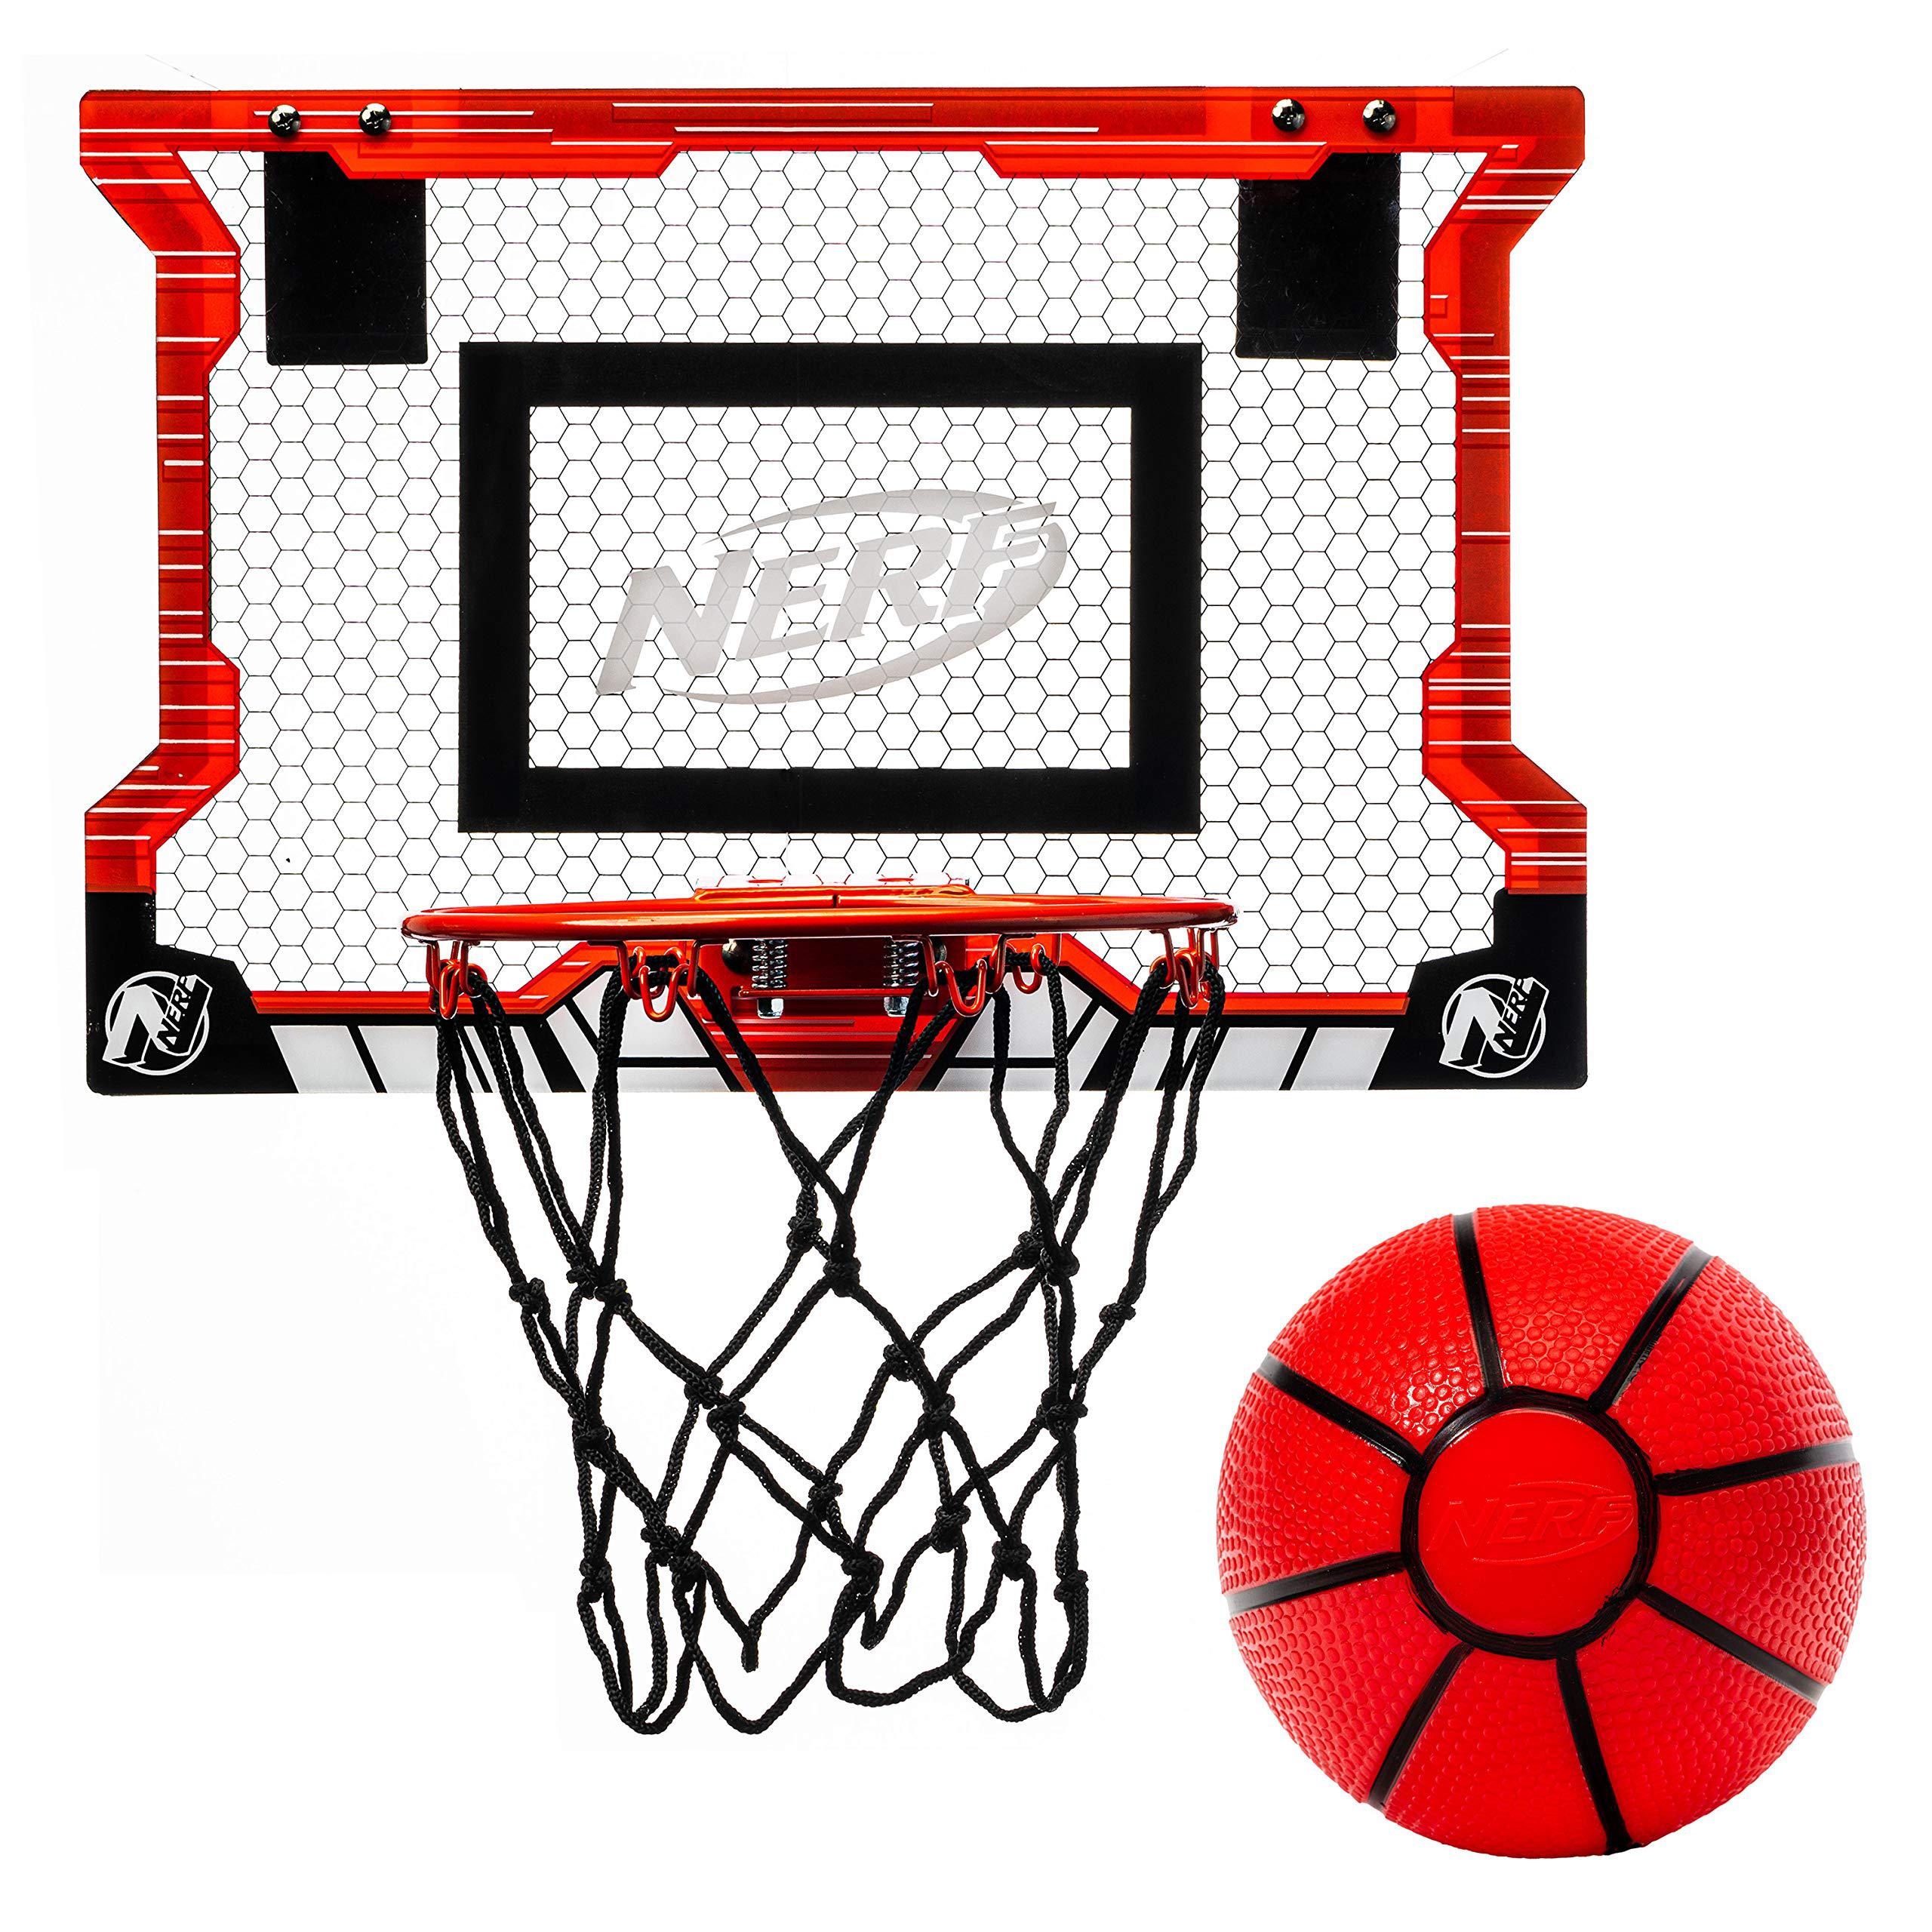 nerf basketball hoop set - pro hoop mini hoop set with mini nerf basketball - steel rim great for dunking - over the door bas